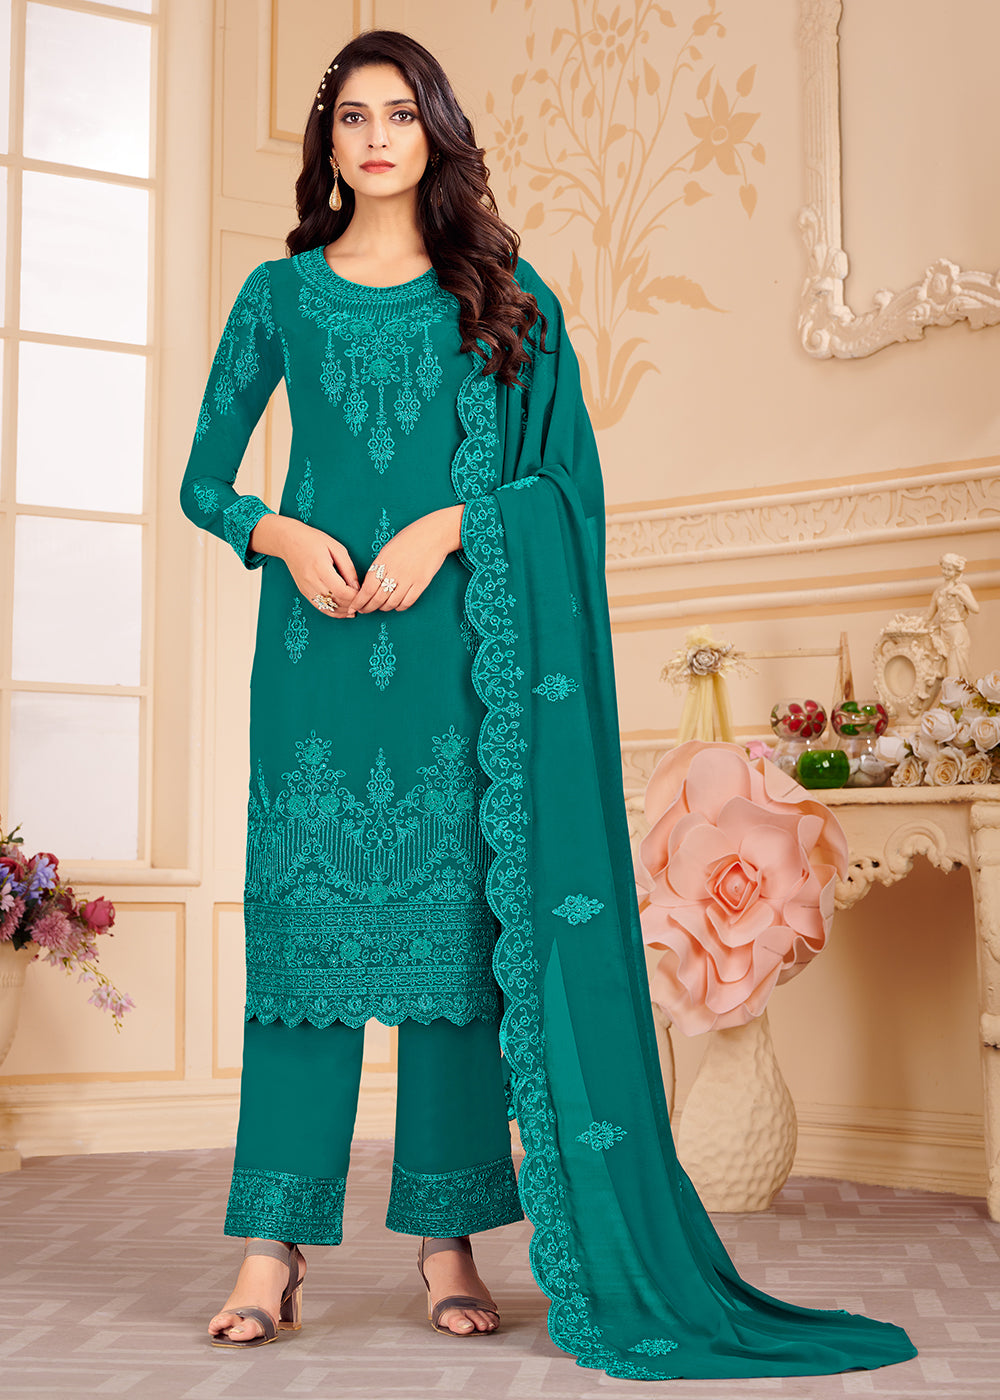 Buy Now Trendy Teal Blue Georgette Eid Wear Salwar Kurta Suit Online in USA, UK, Canada & Worldwide at Empress Clothing.